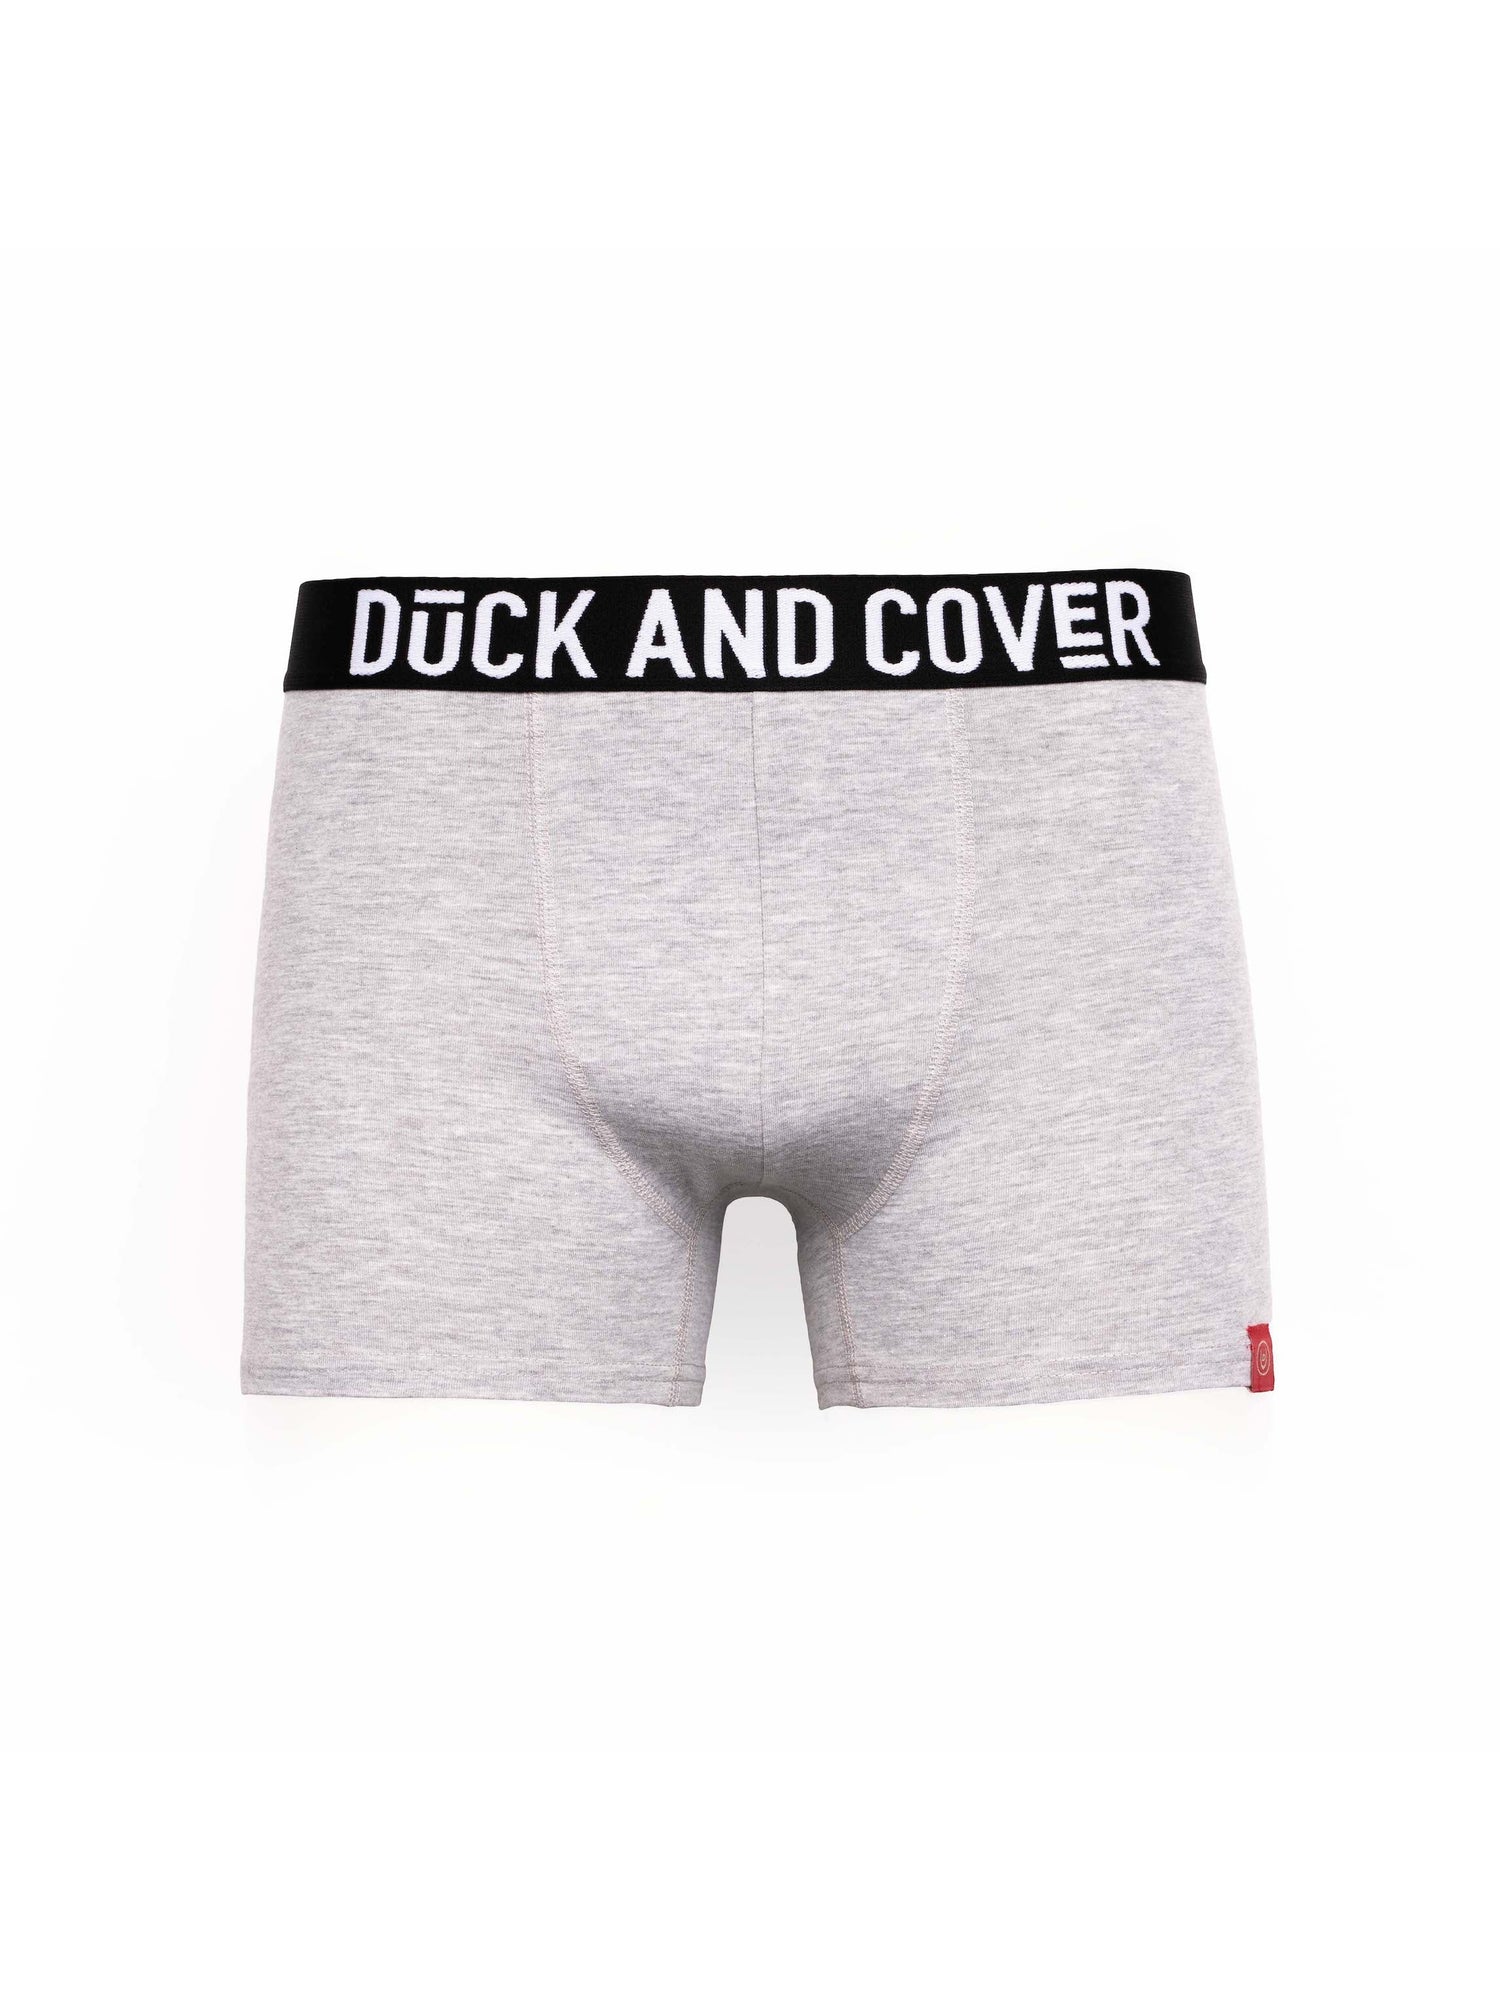 Mens Darton Boxers 2pk Grey Marl – Duck and Cover